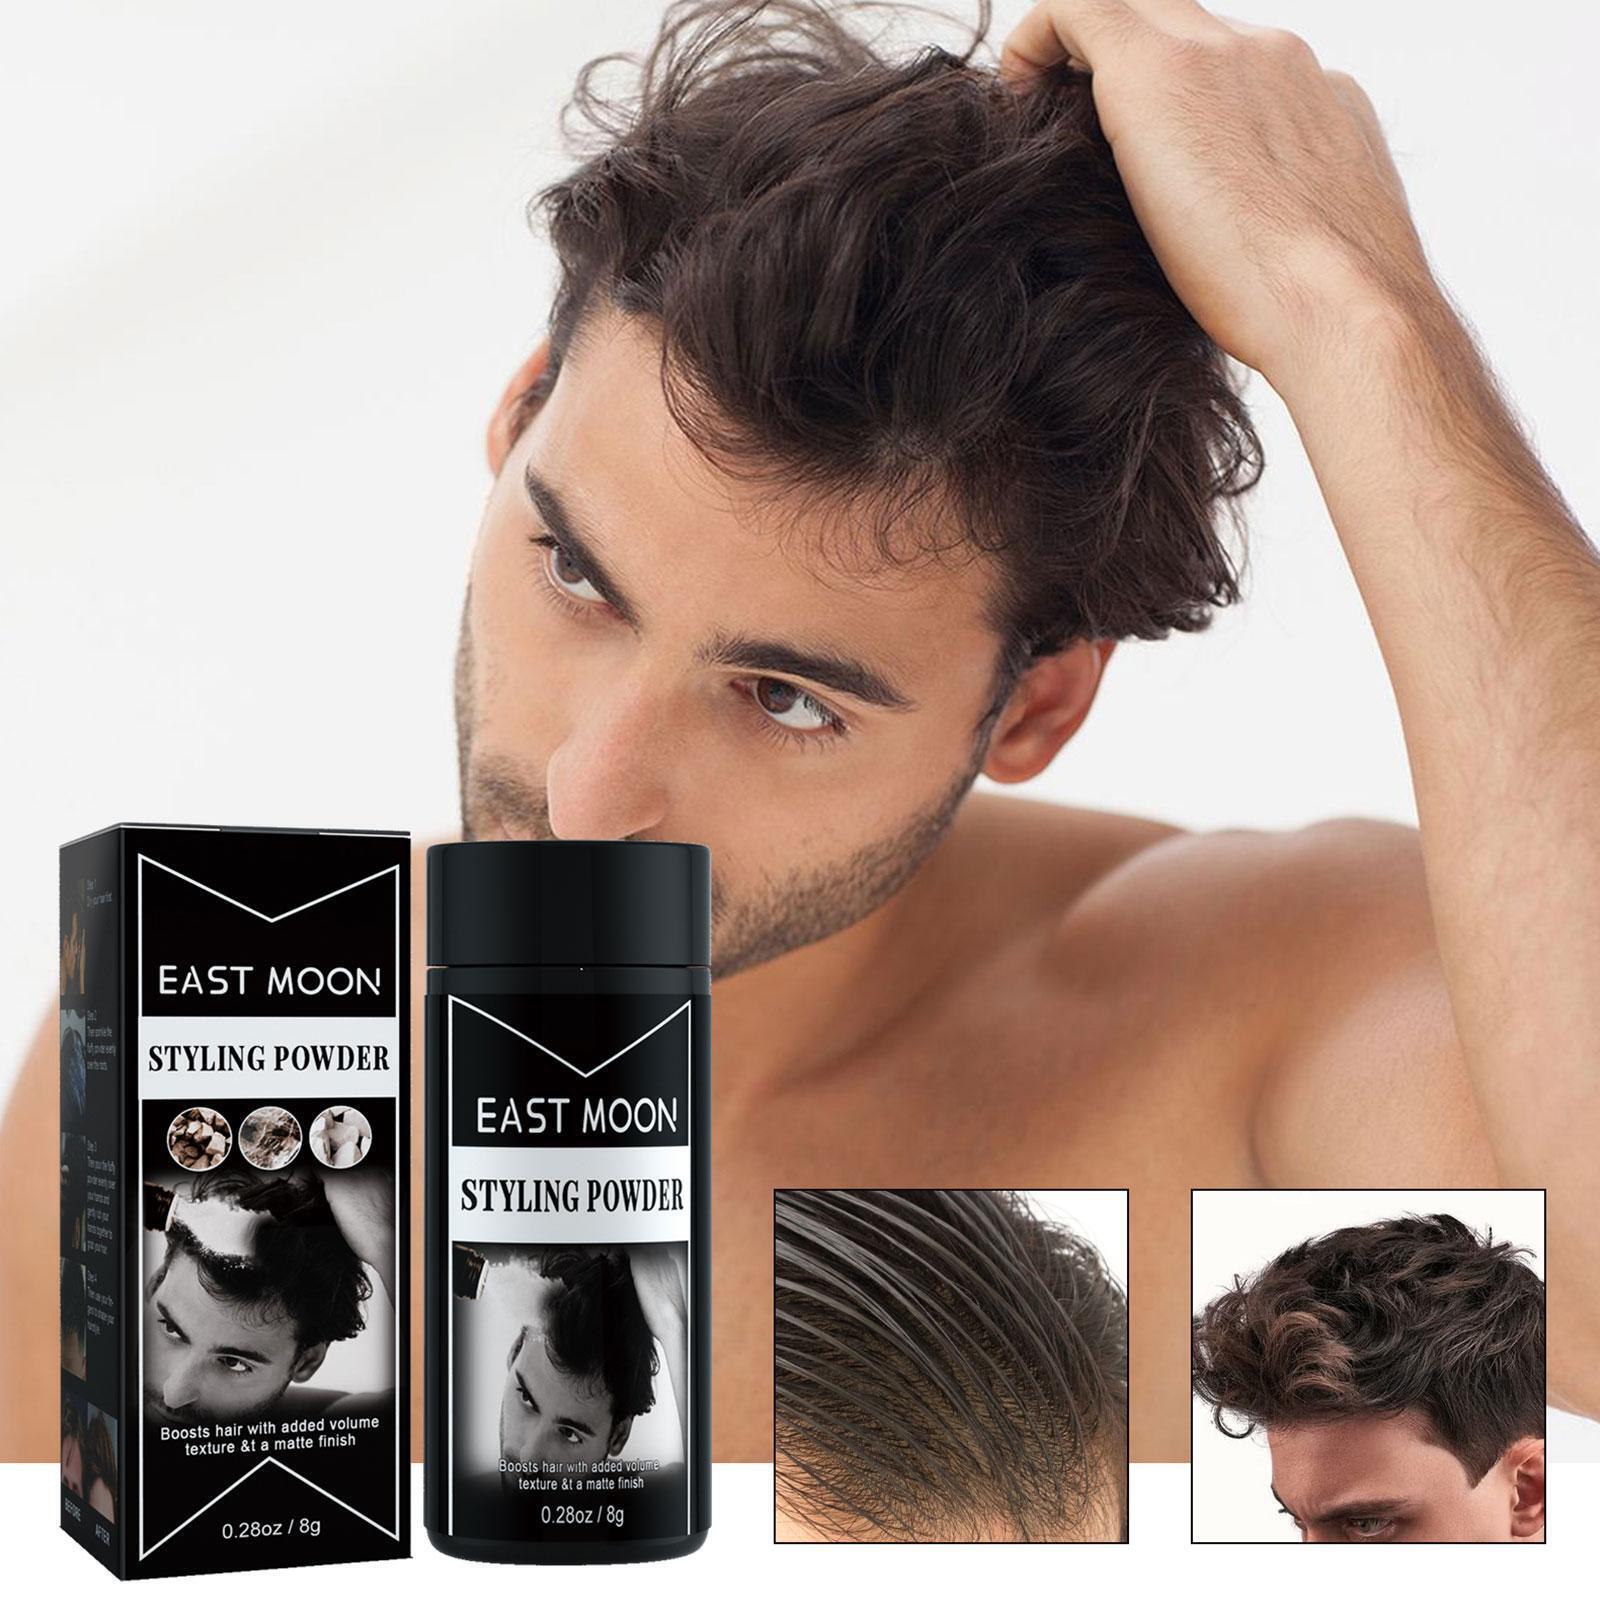 Men's Styling Texture Powder Hair Styling Care new V2X7 | eBay